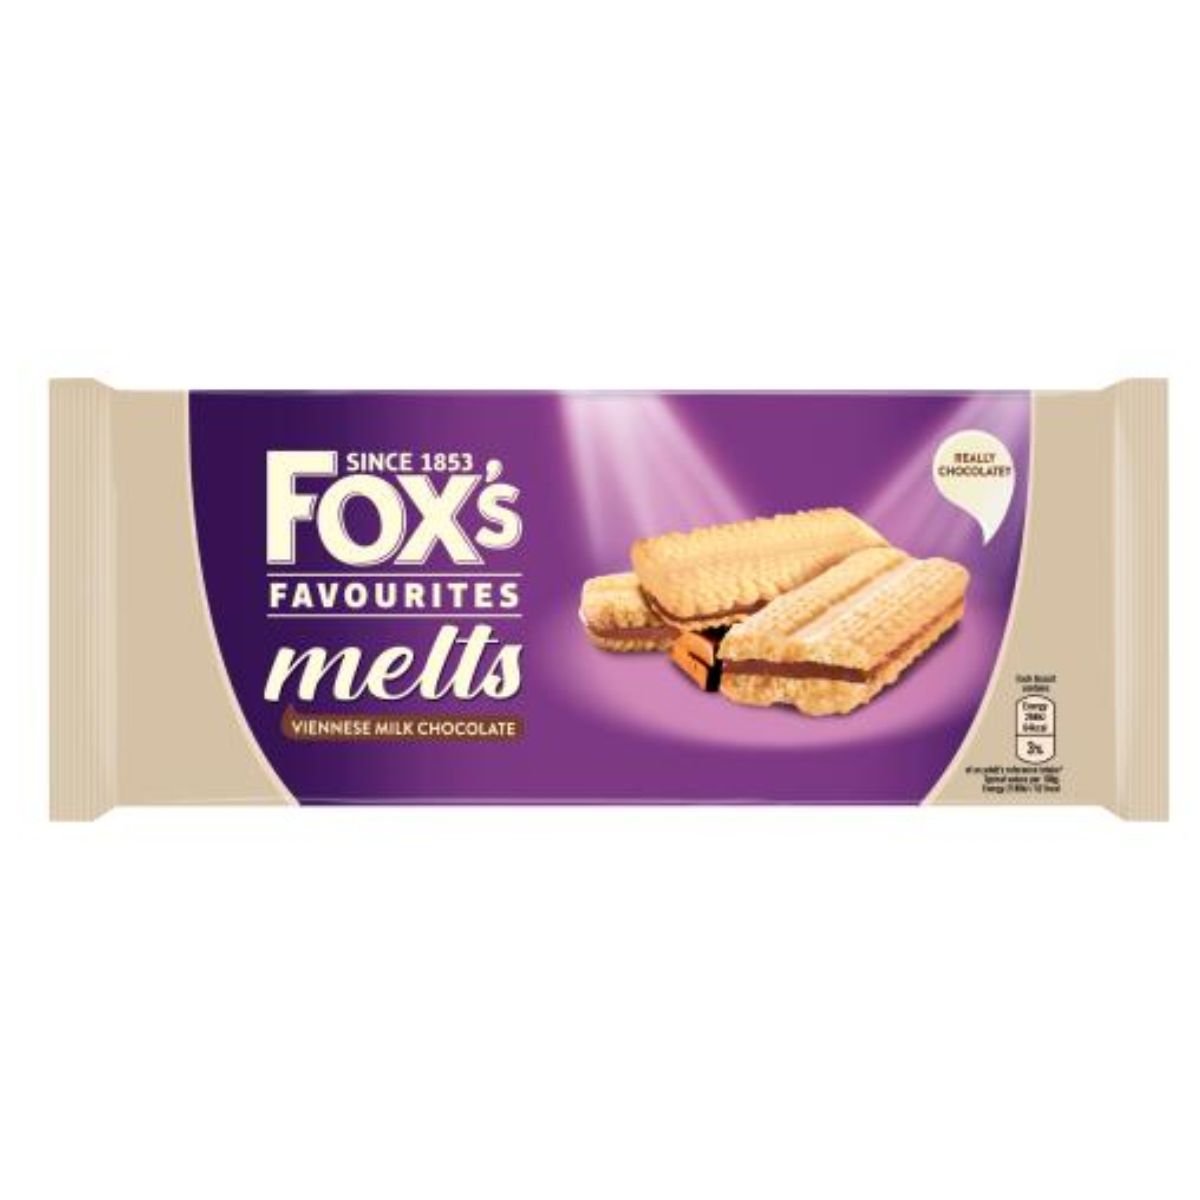 Fox's - Favourites Melts Viennese Milk Chocolate bar.